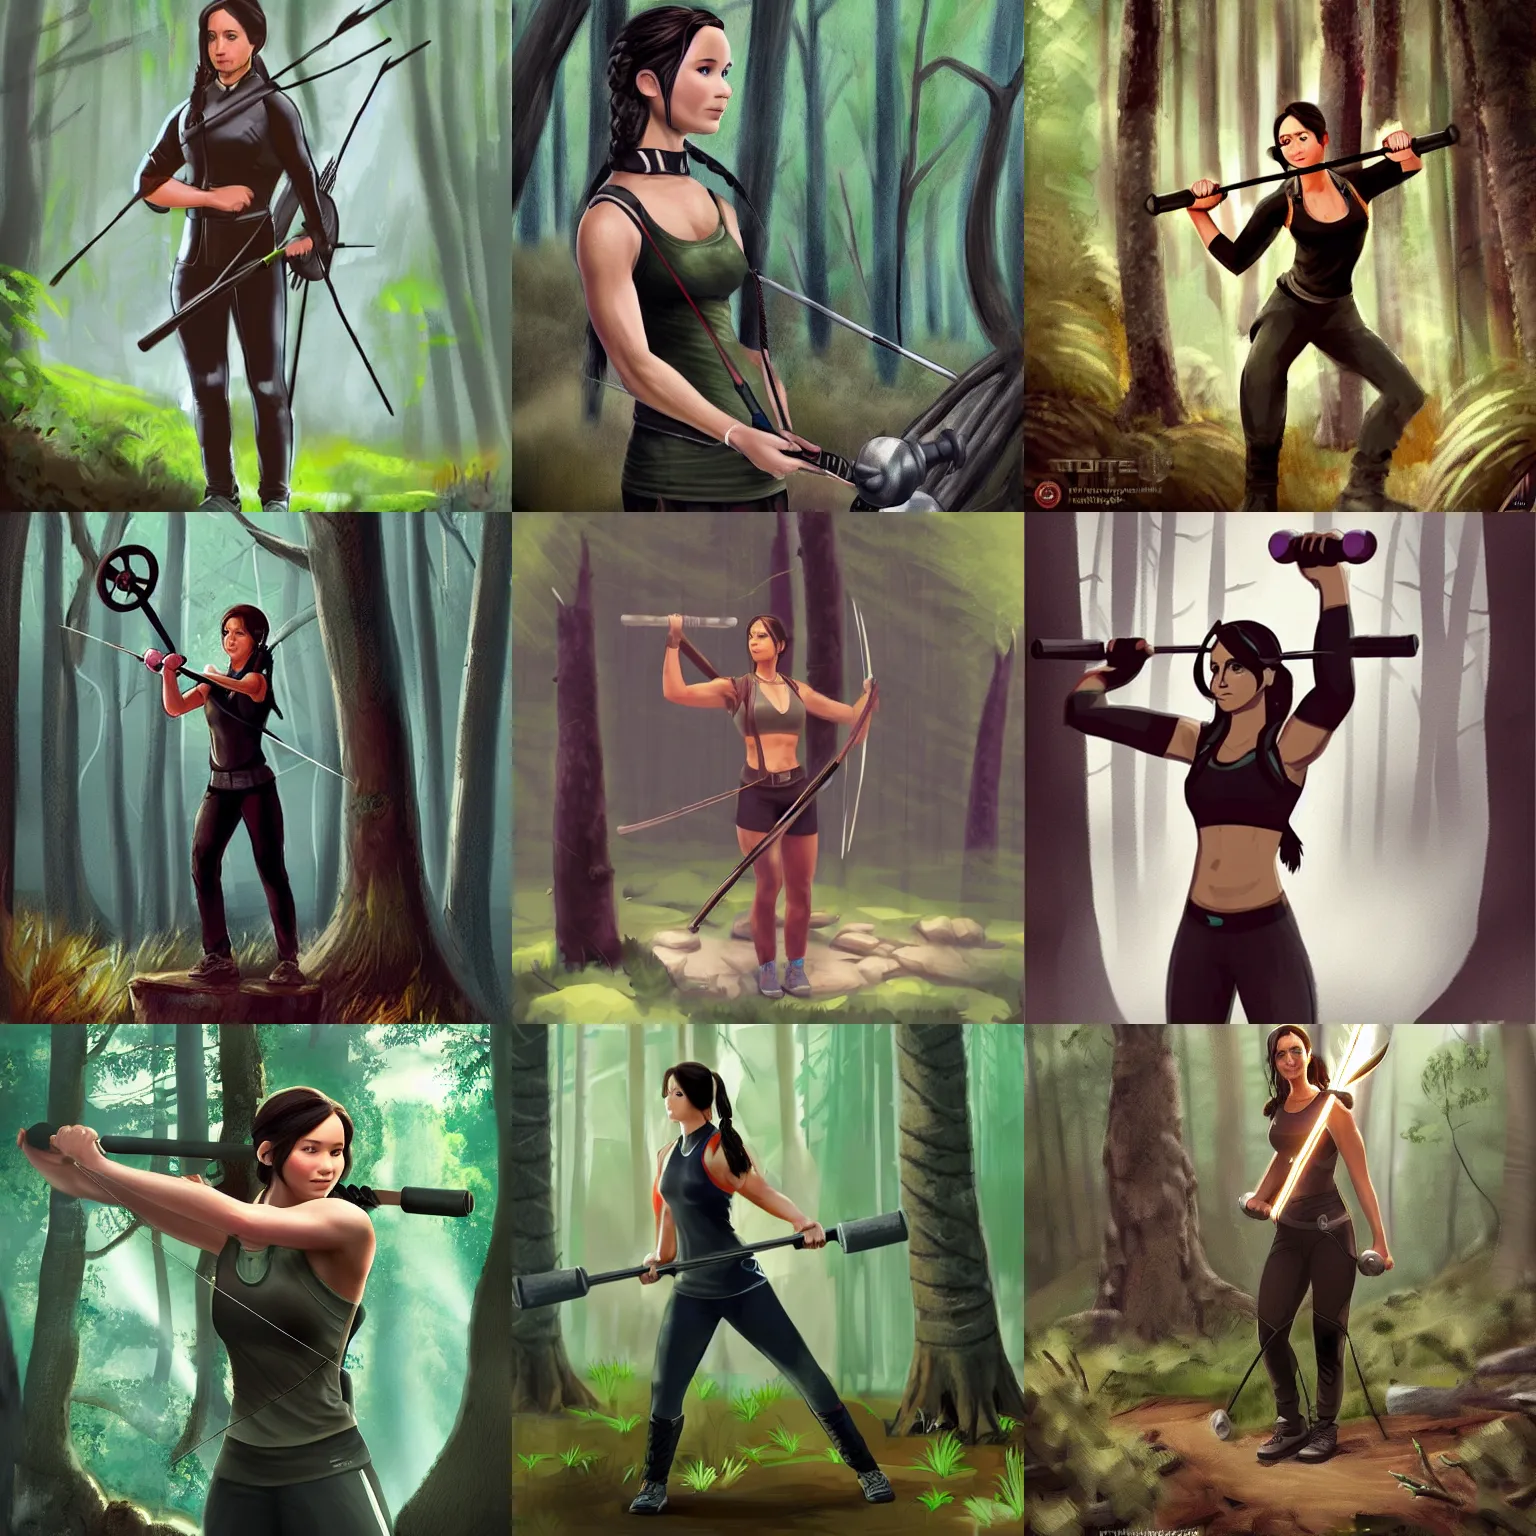 Prompt: Katniss Everdeen lifting dumbbells in a forest, concept art, artstation